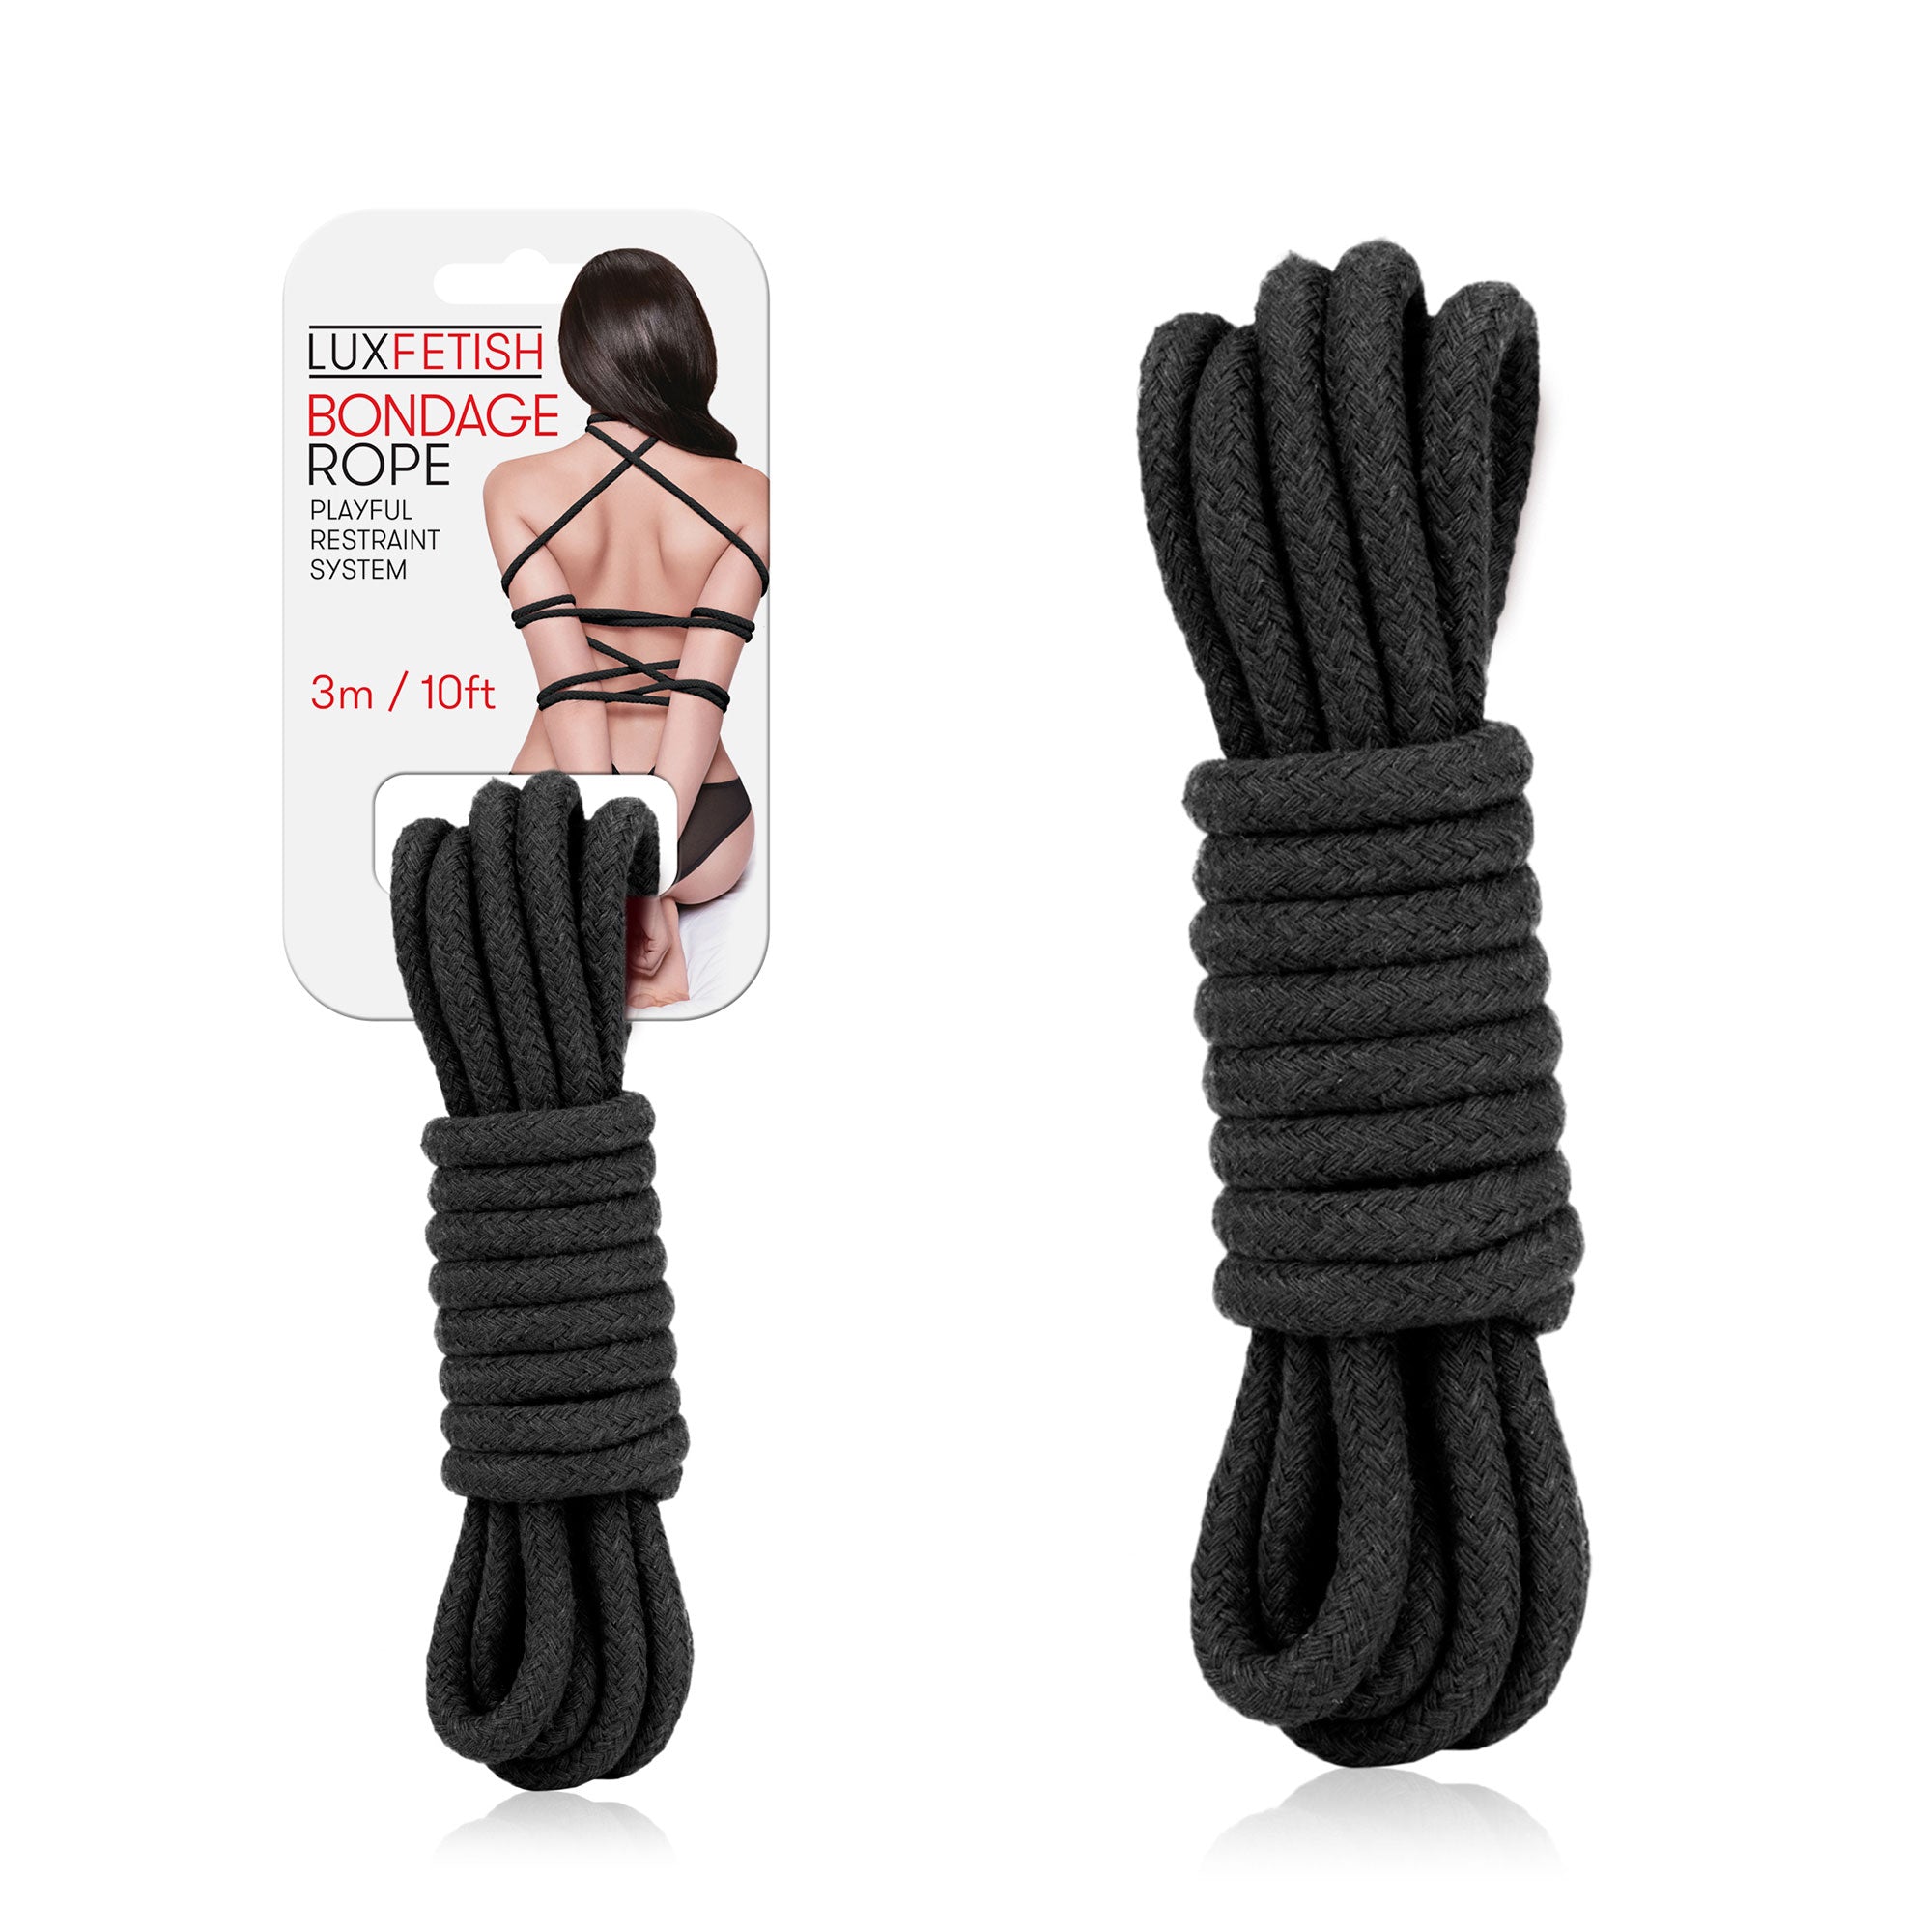 Sexy Bondage Rope 3m / 10ft - Black-1